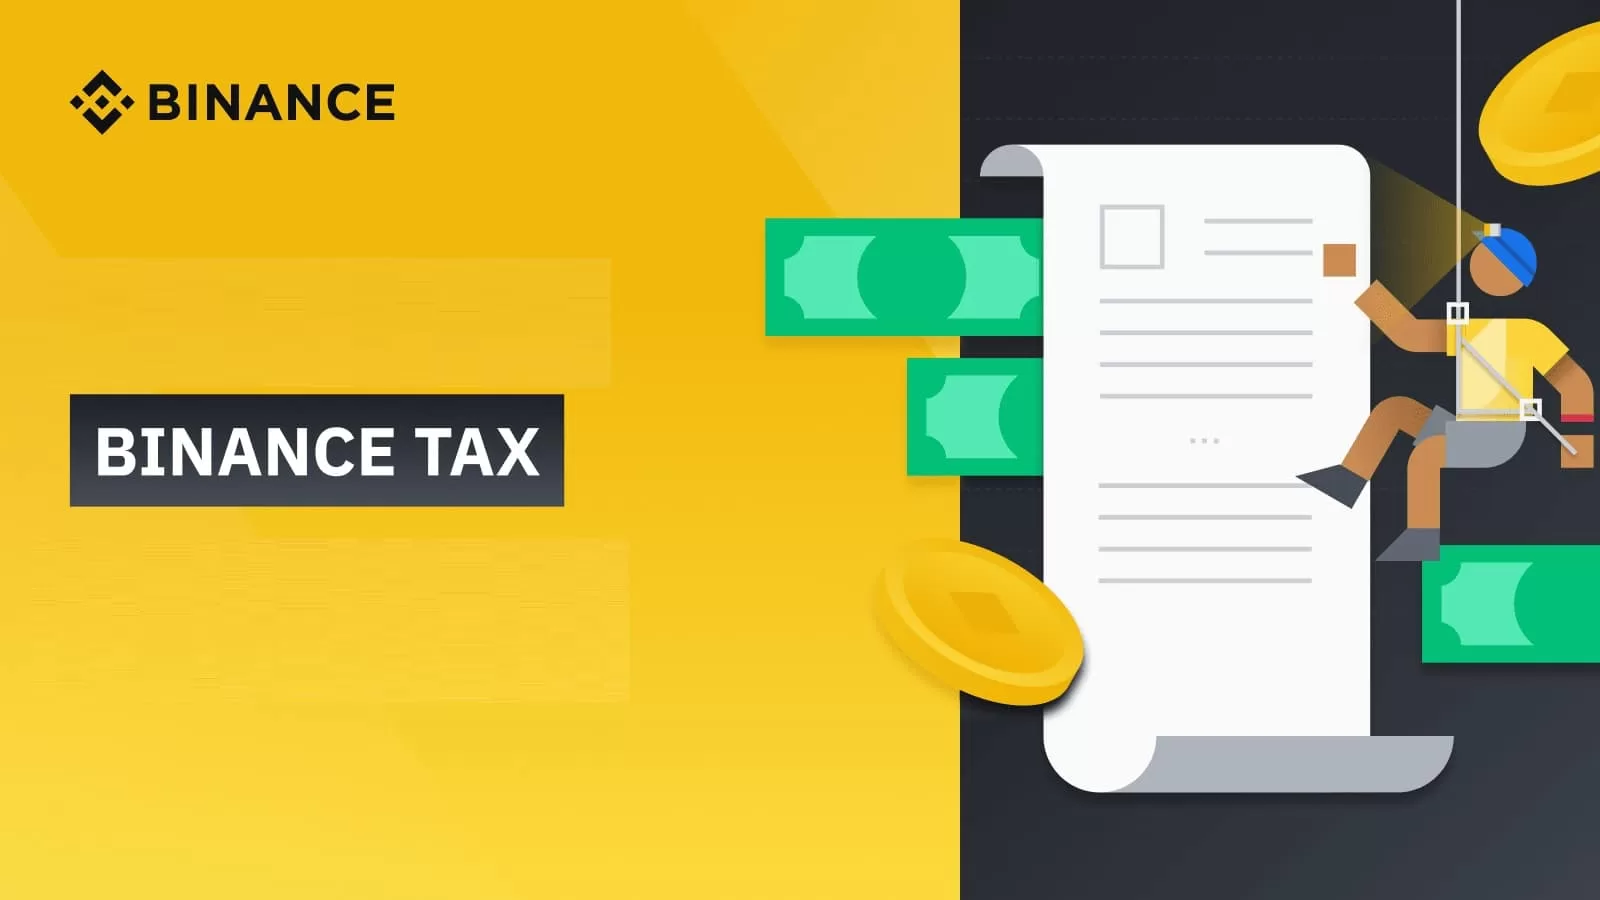 Binance Launches Binance Tax Tool